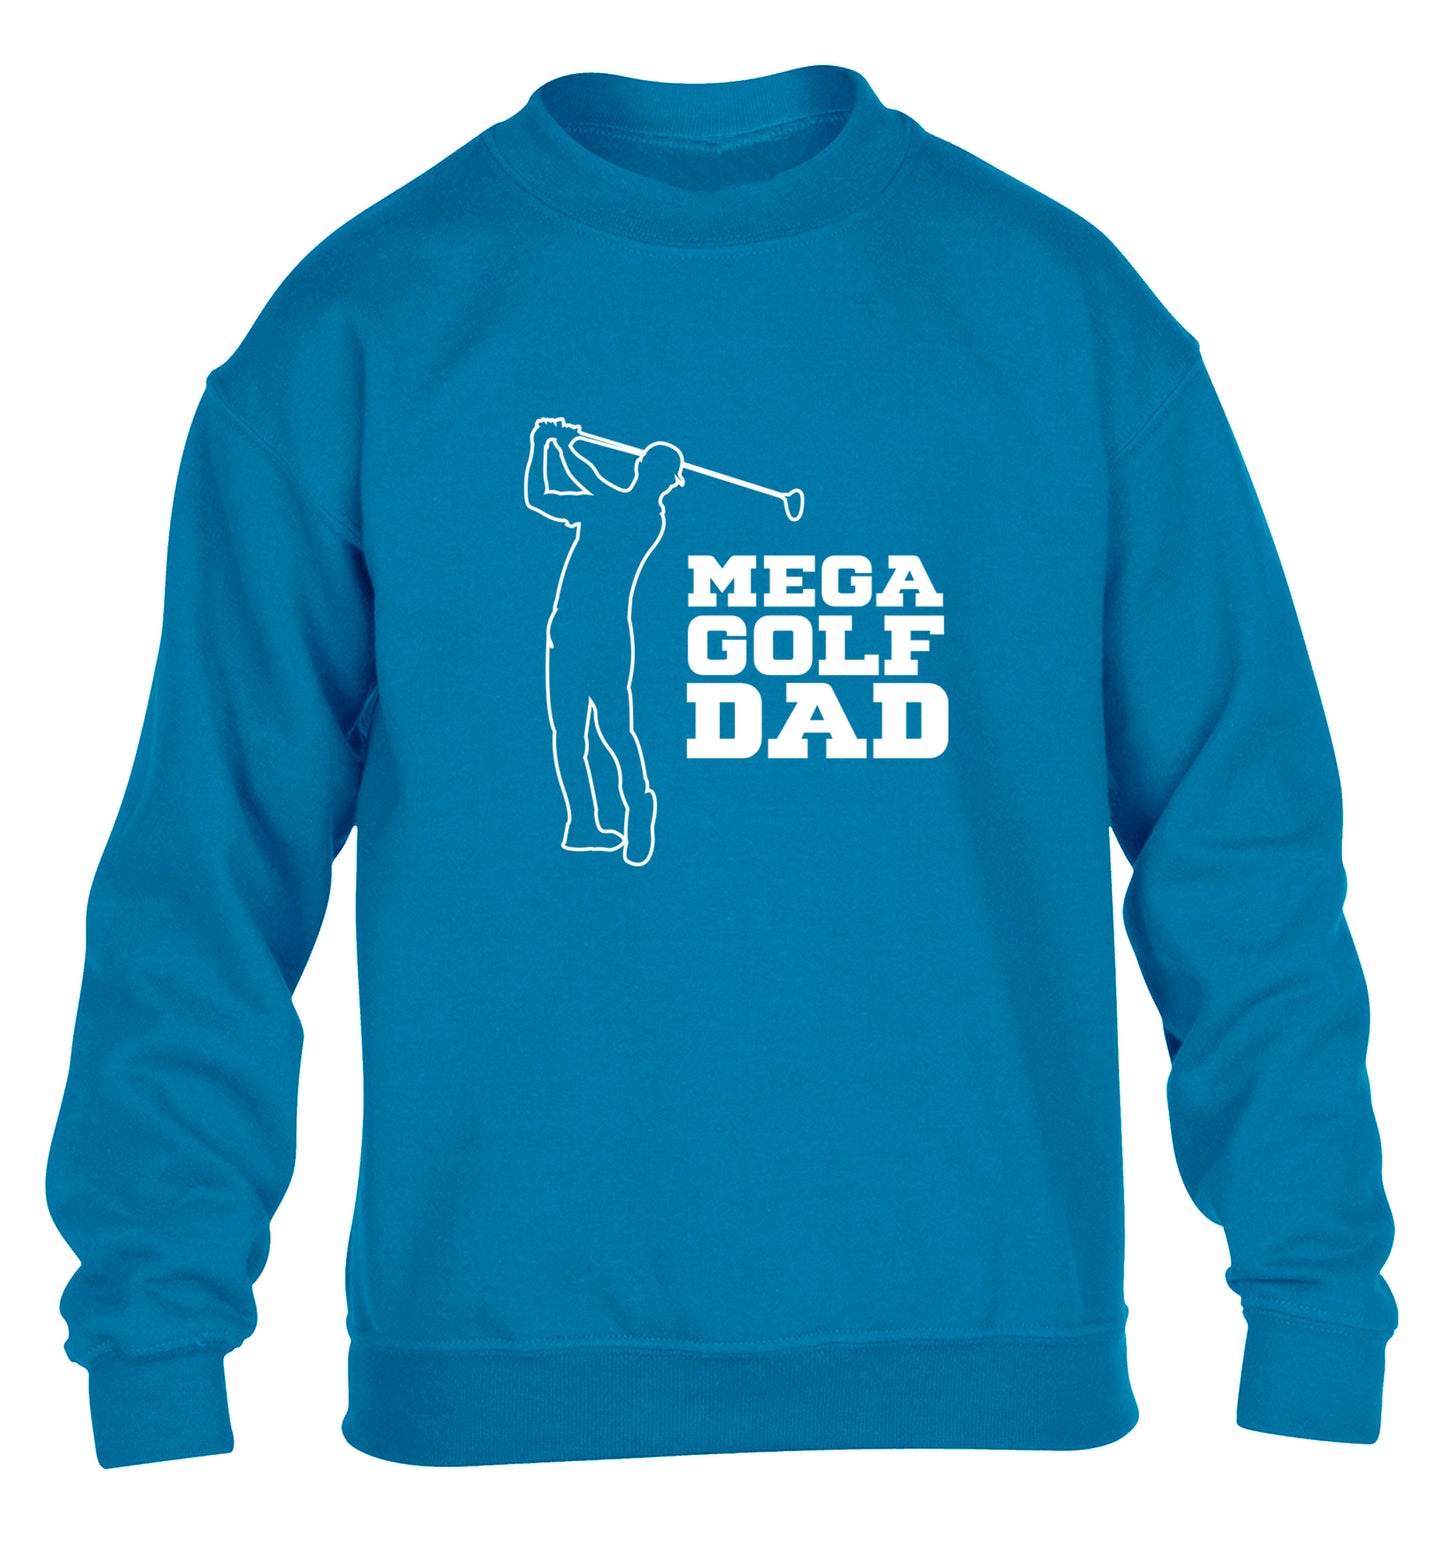 Mega golfing dad children's blue sweater 12-13 Years